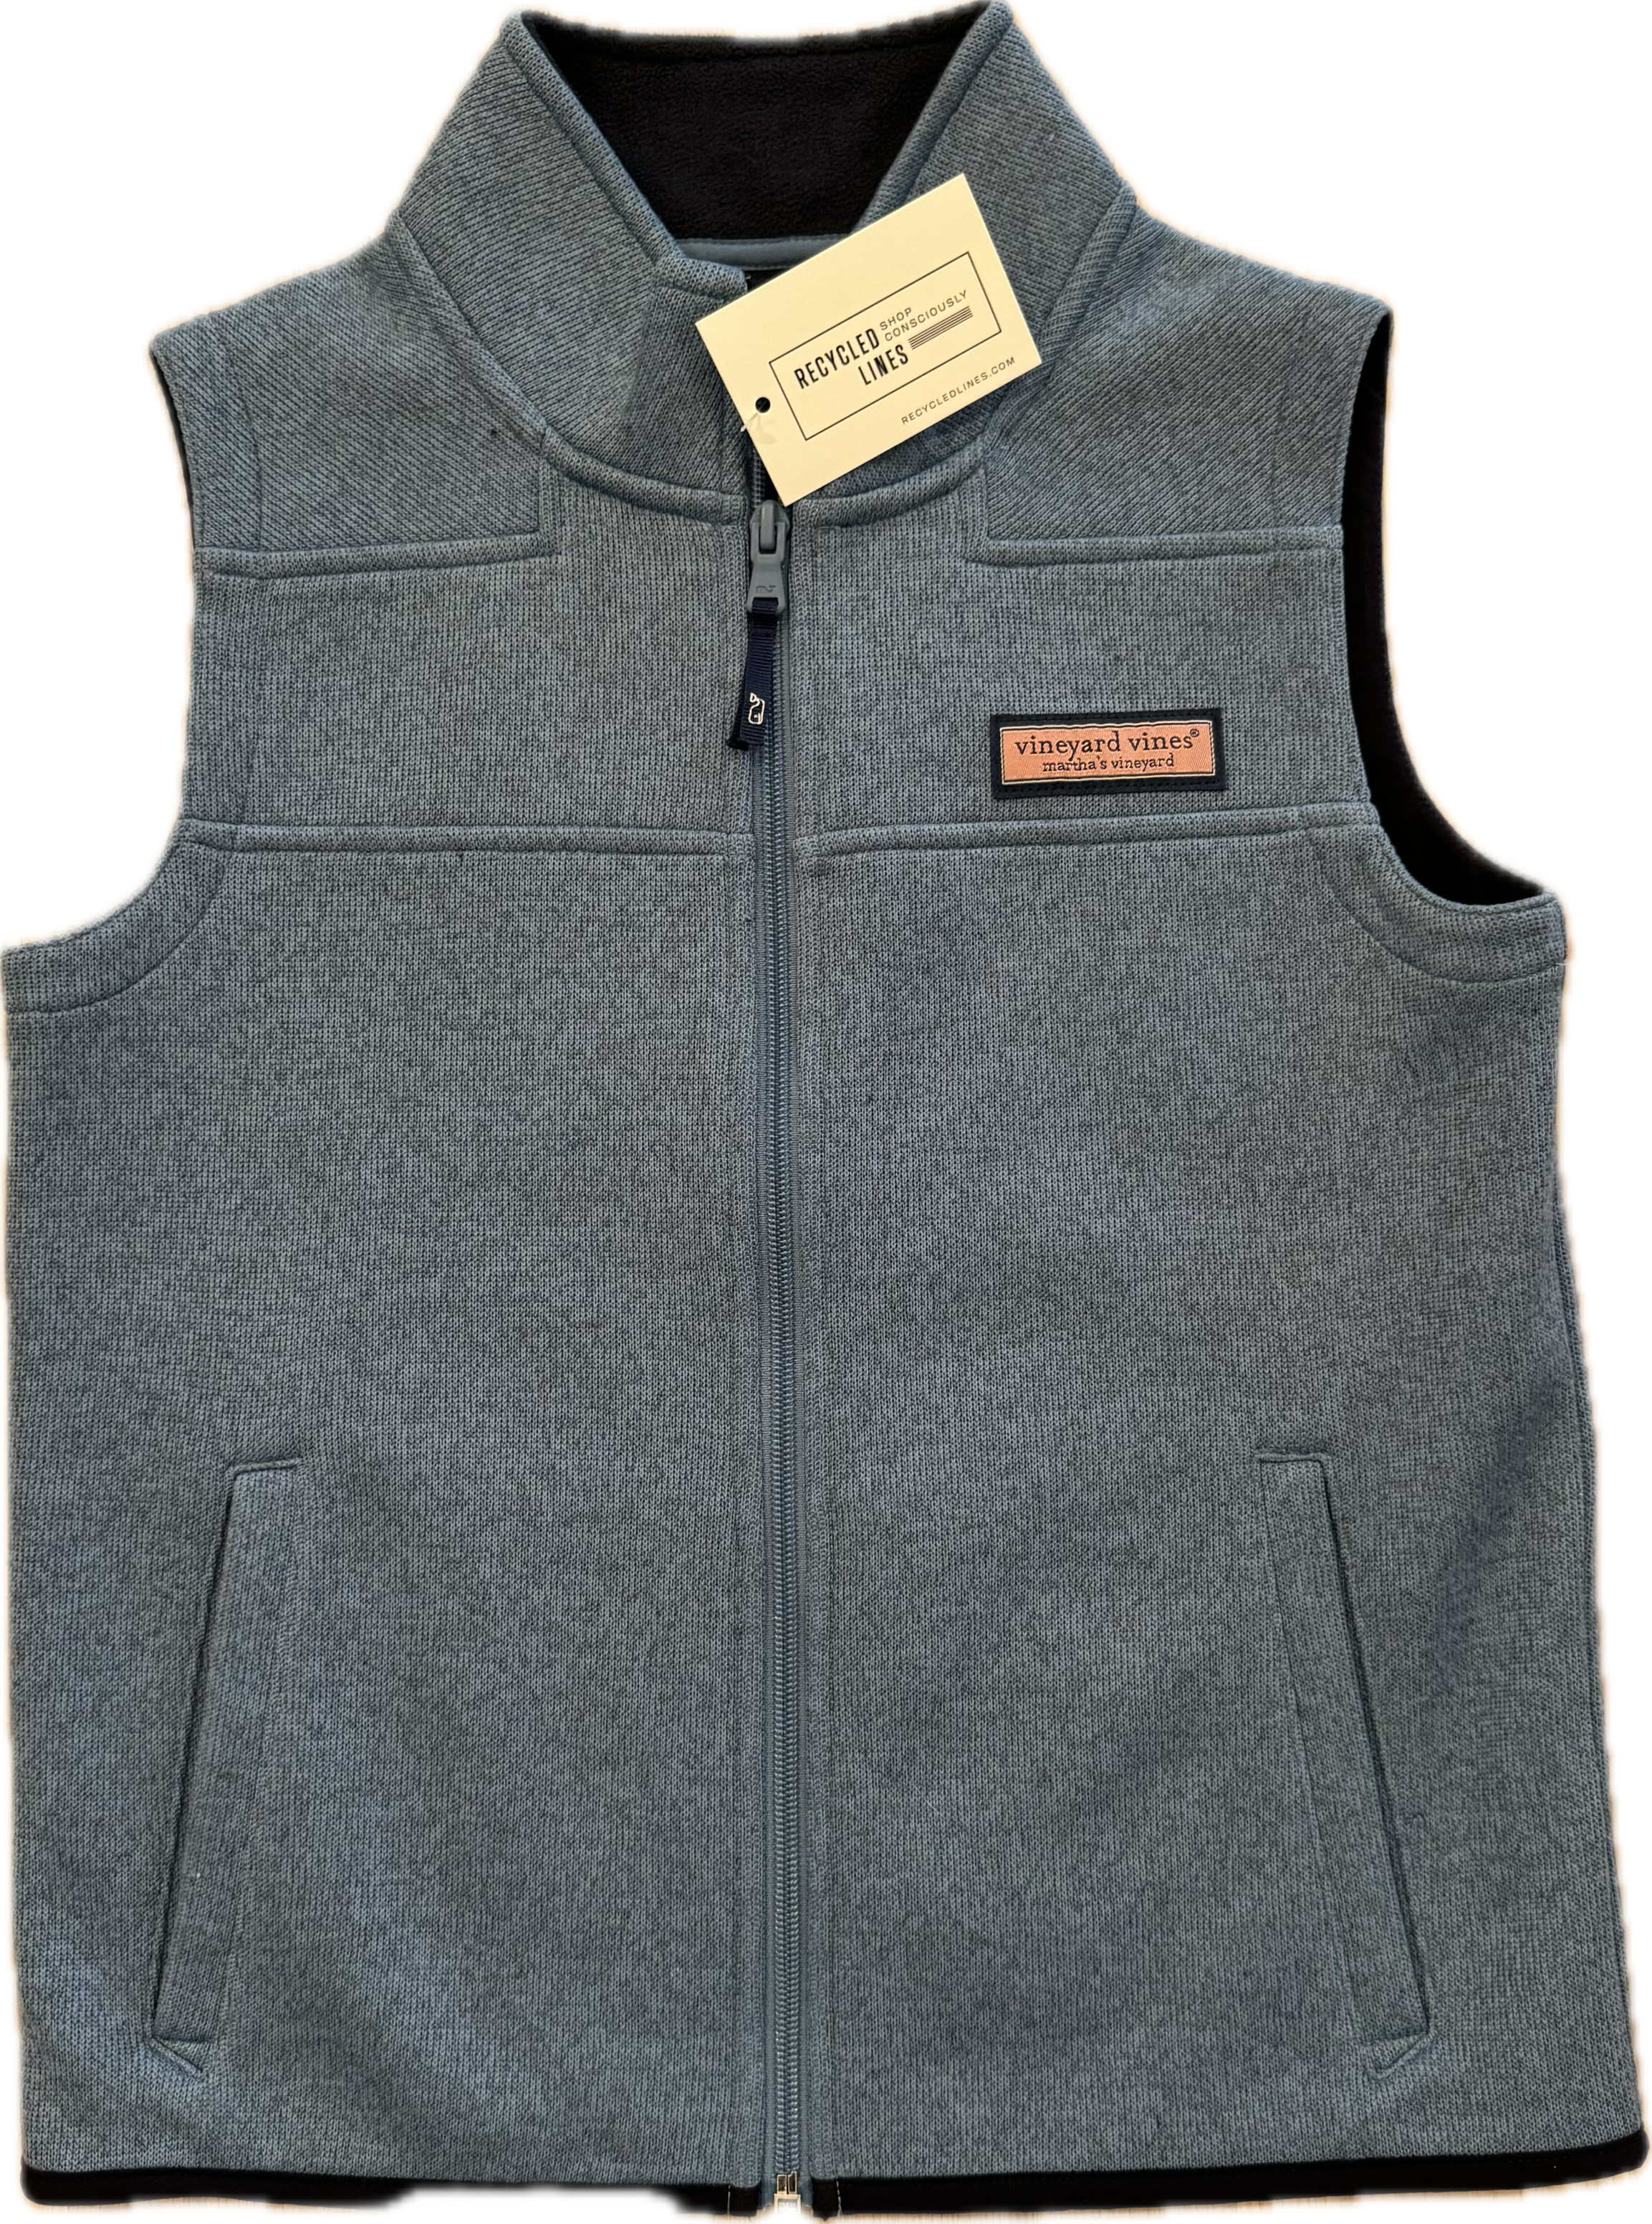 Vineyard Vines Fleece Vest, Blue Boys Size S (8/10)